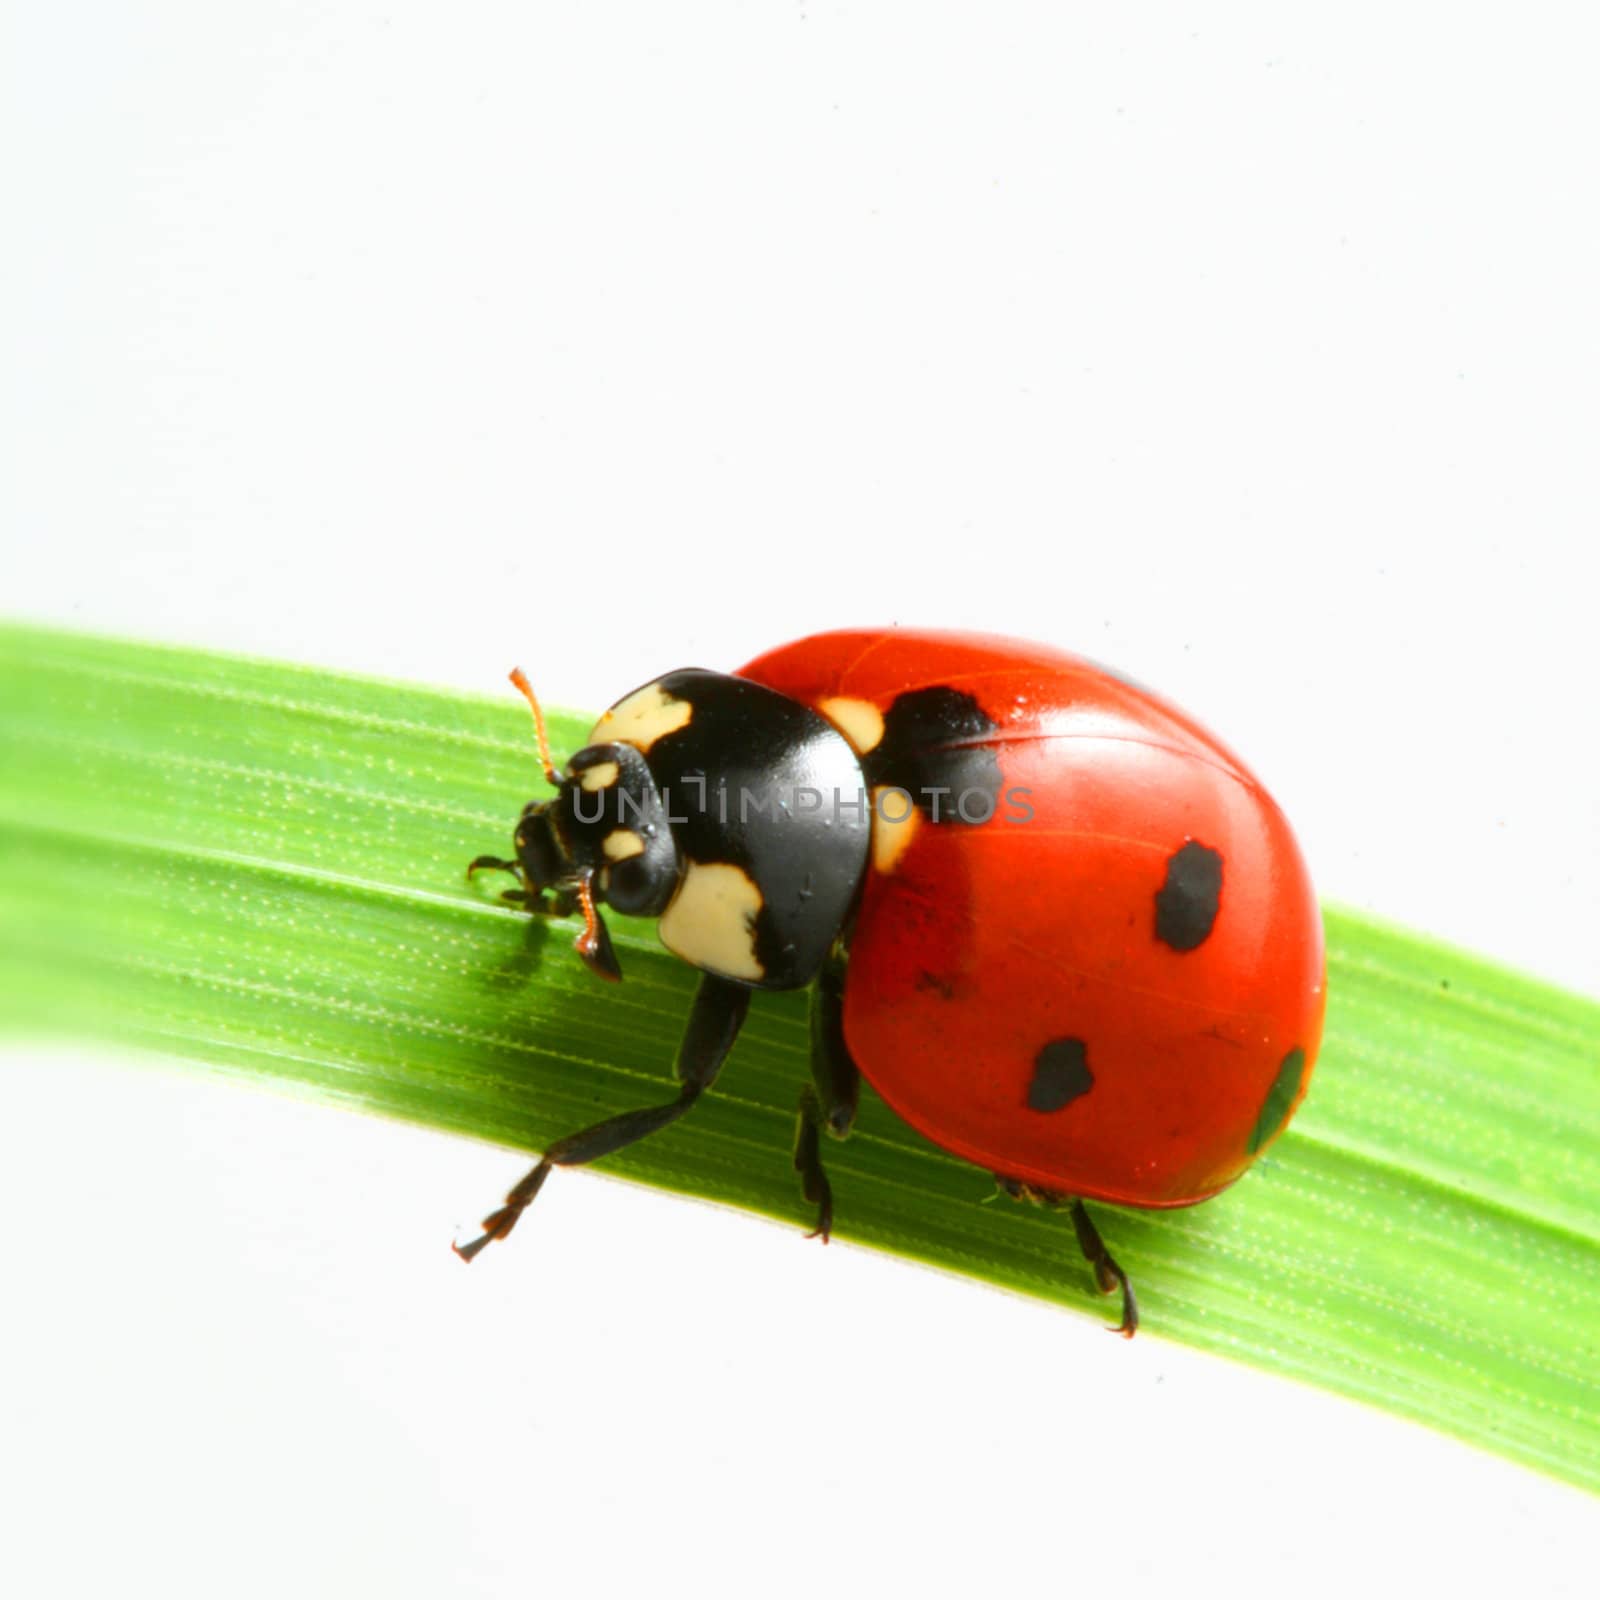 red ladybug by Yellowj